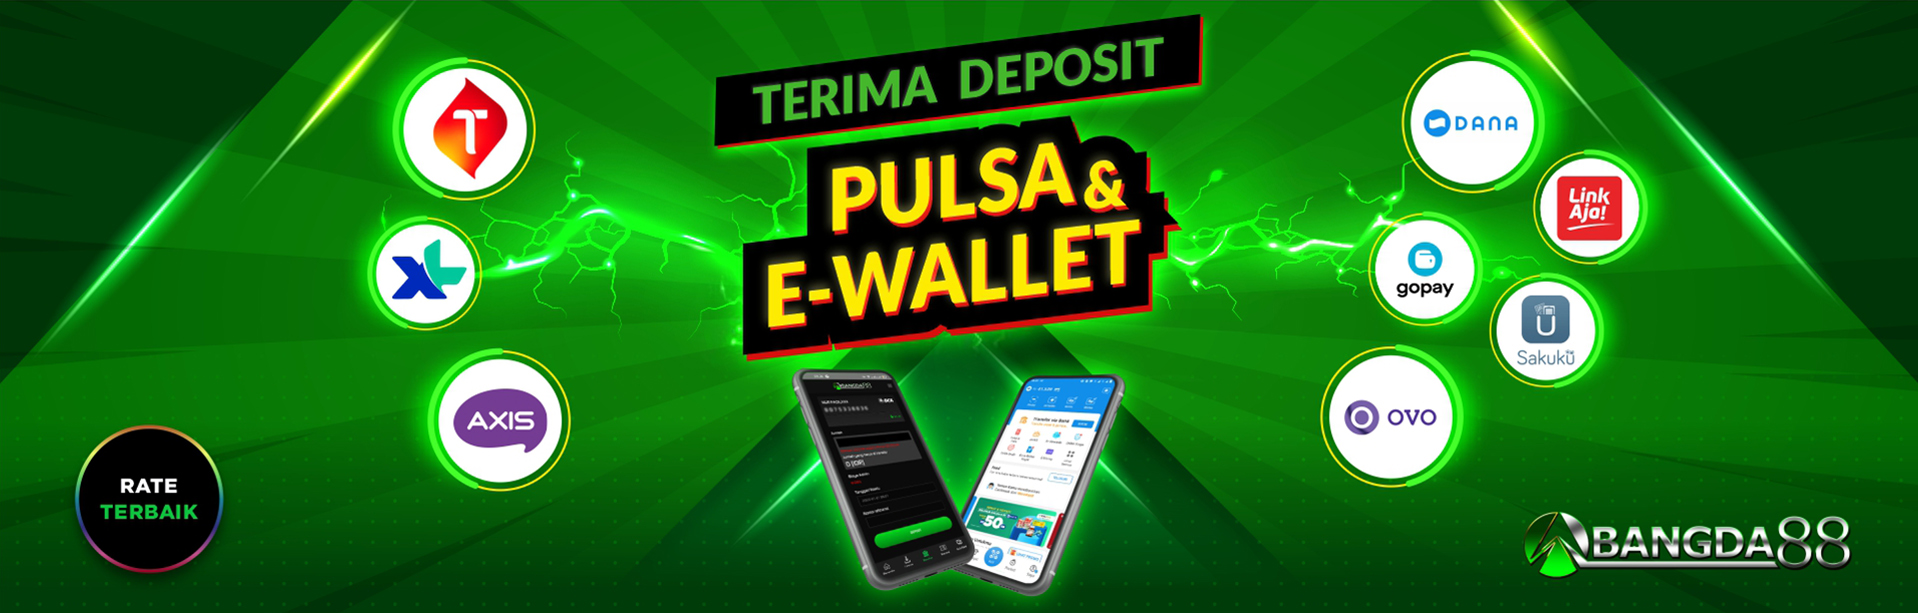 Terima Deposit via Pulsa & E-wallet